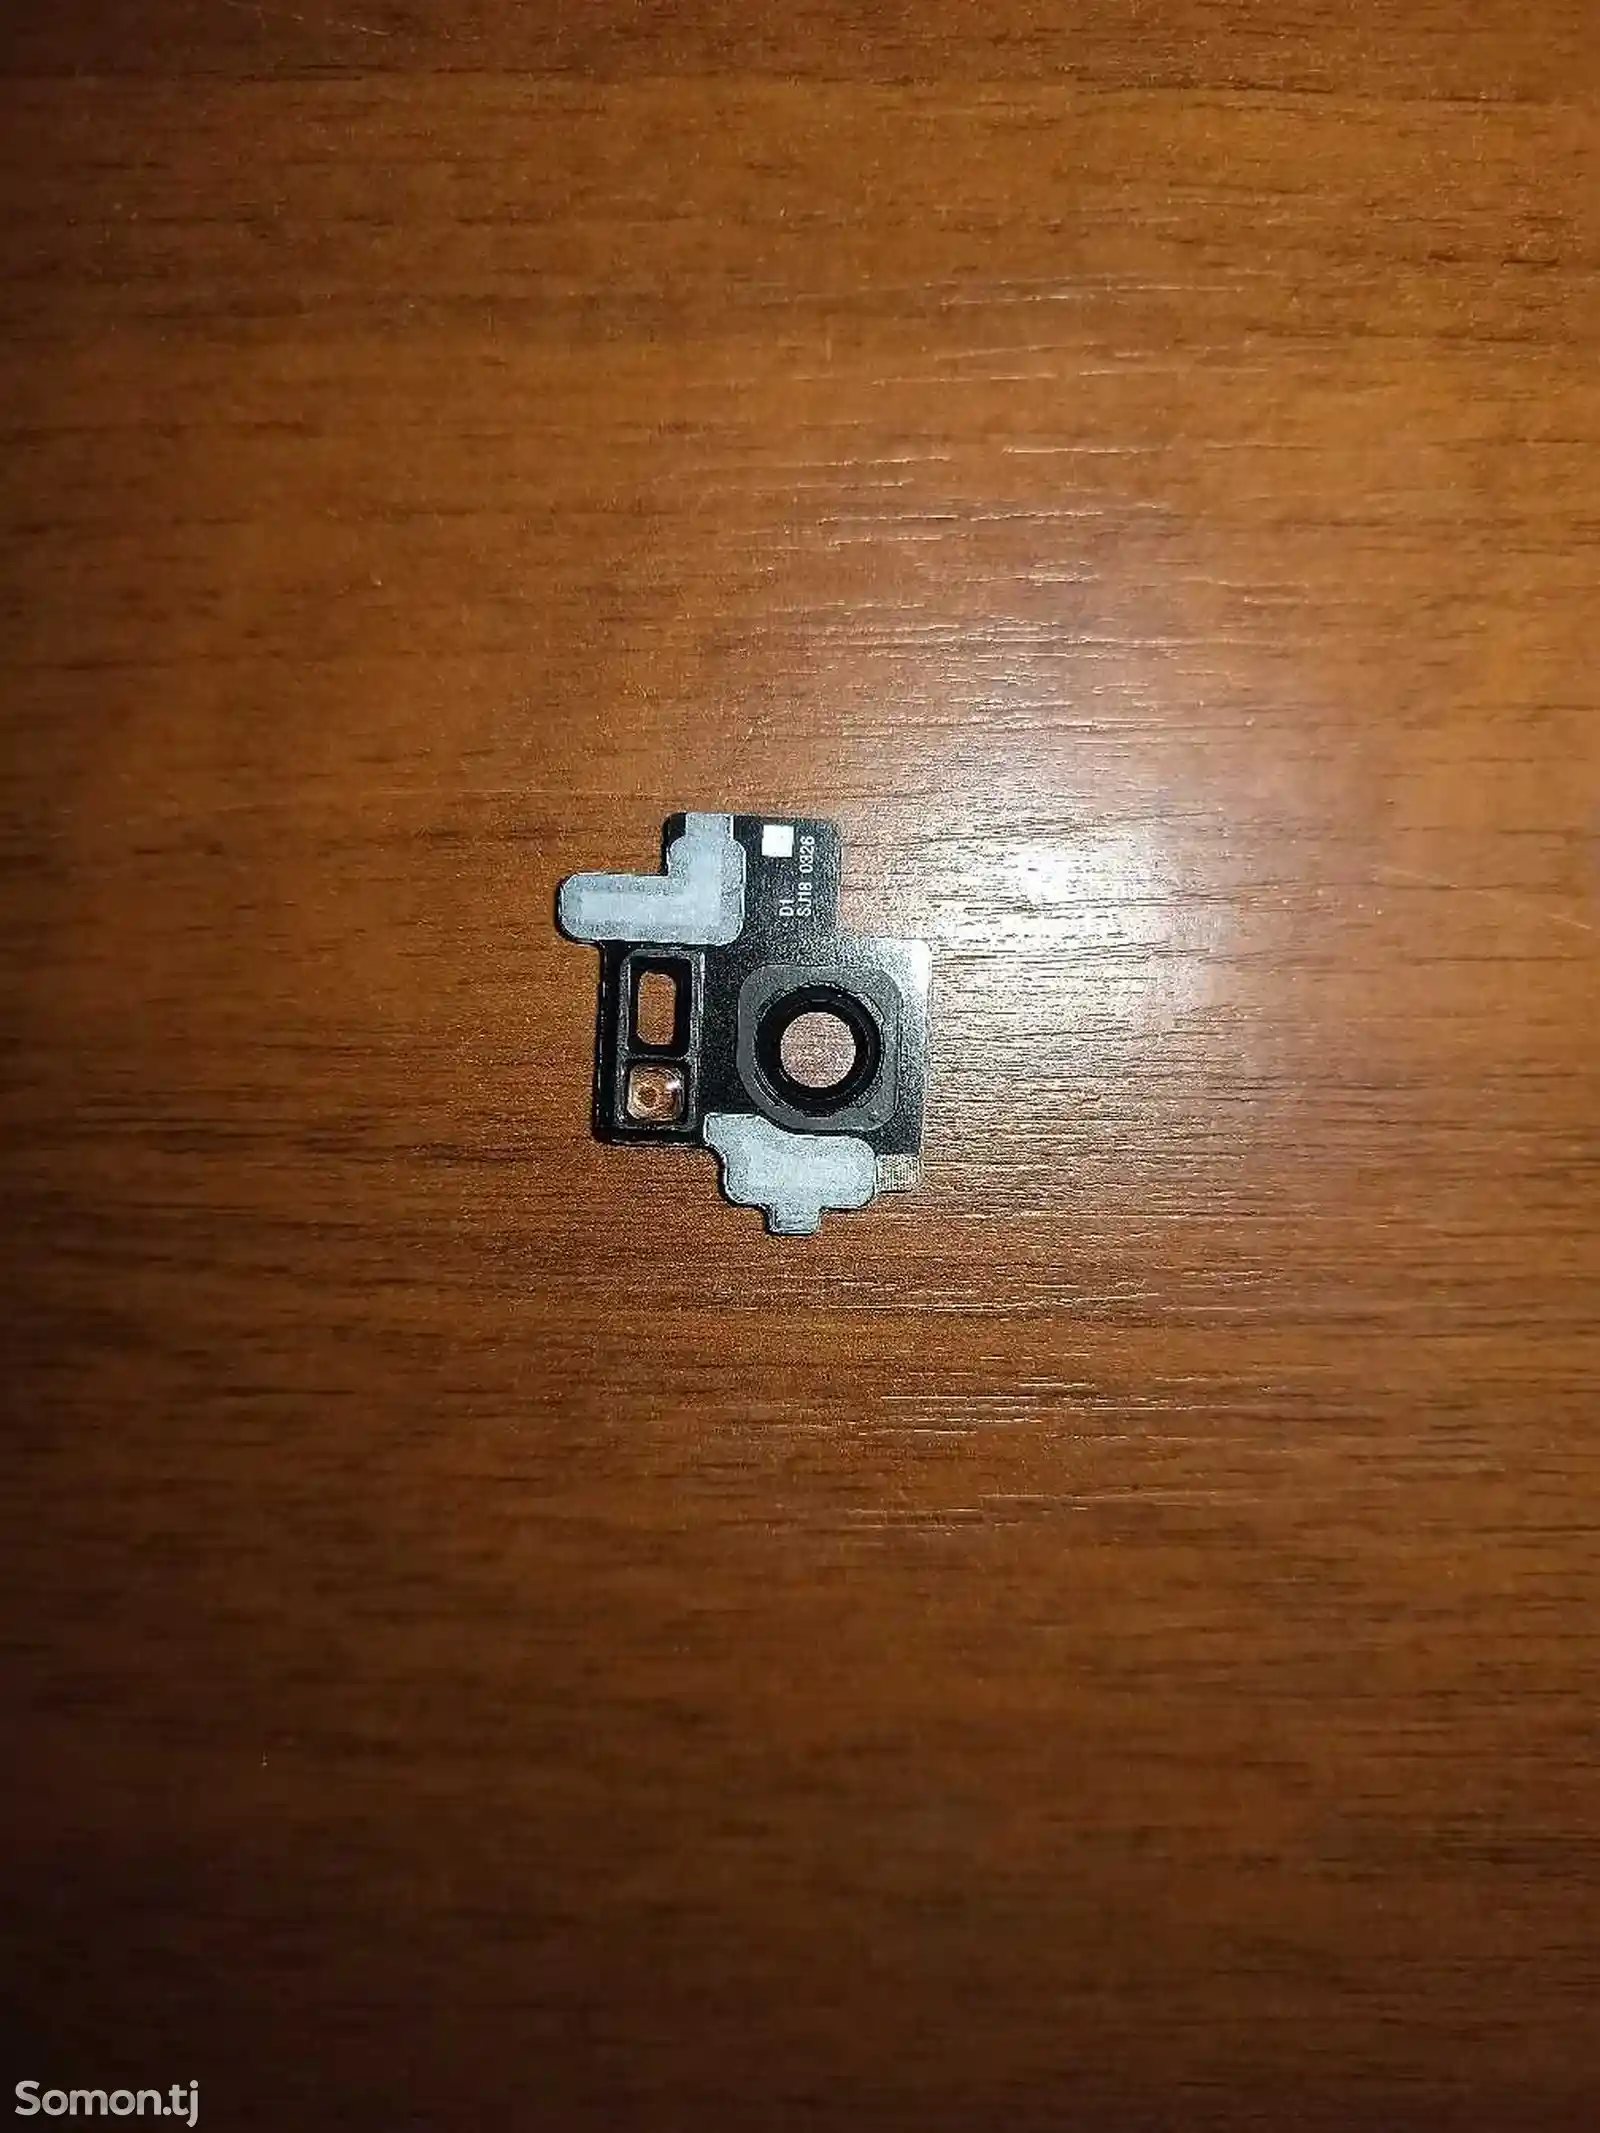 Стекло от камеры Samsung S8 edge-1